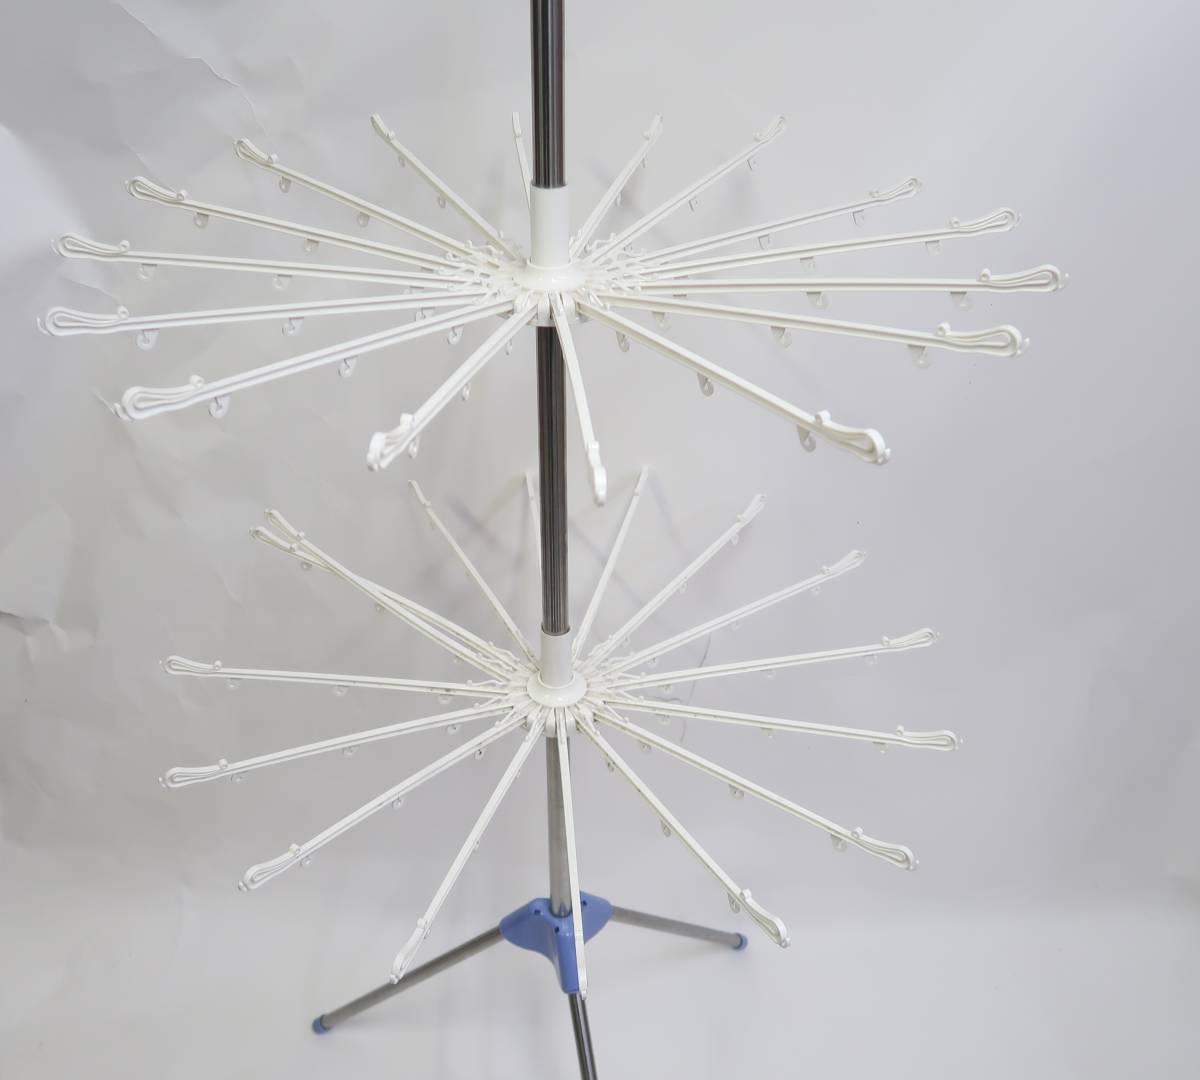  extra attaching! Iris o-yama stainless steel interior clotheshorse parasol 3 step 